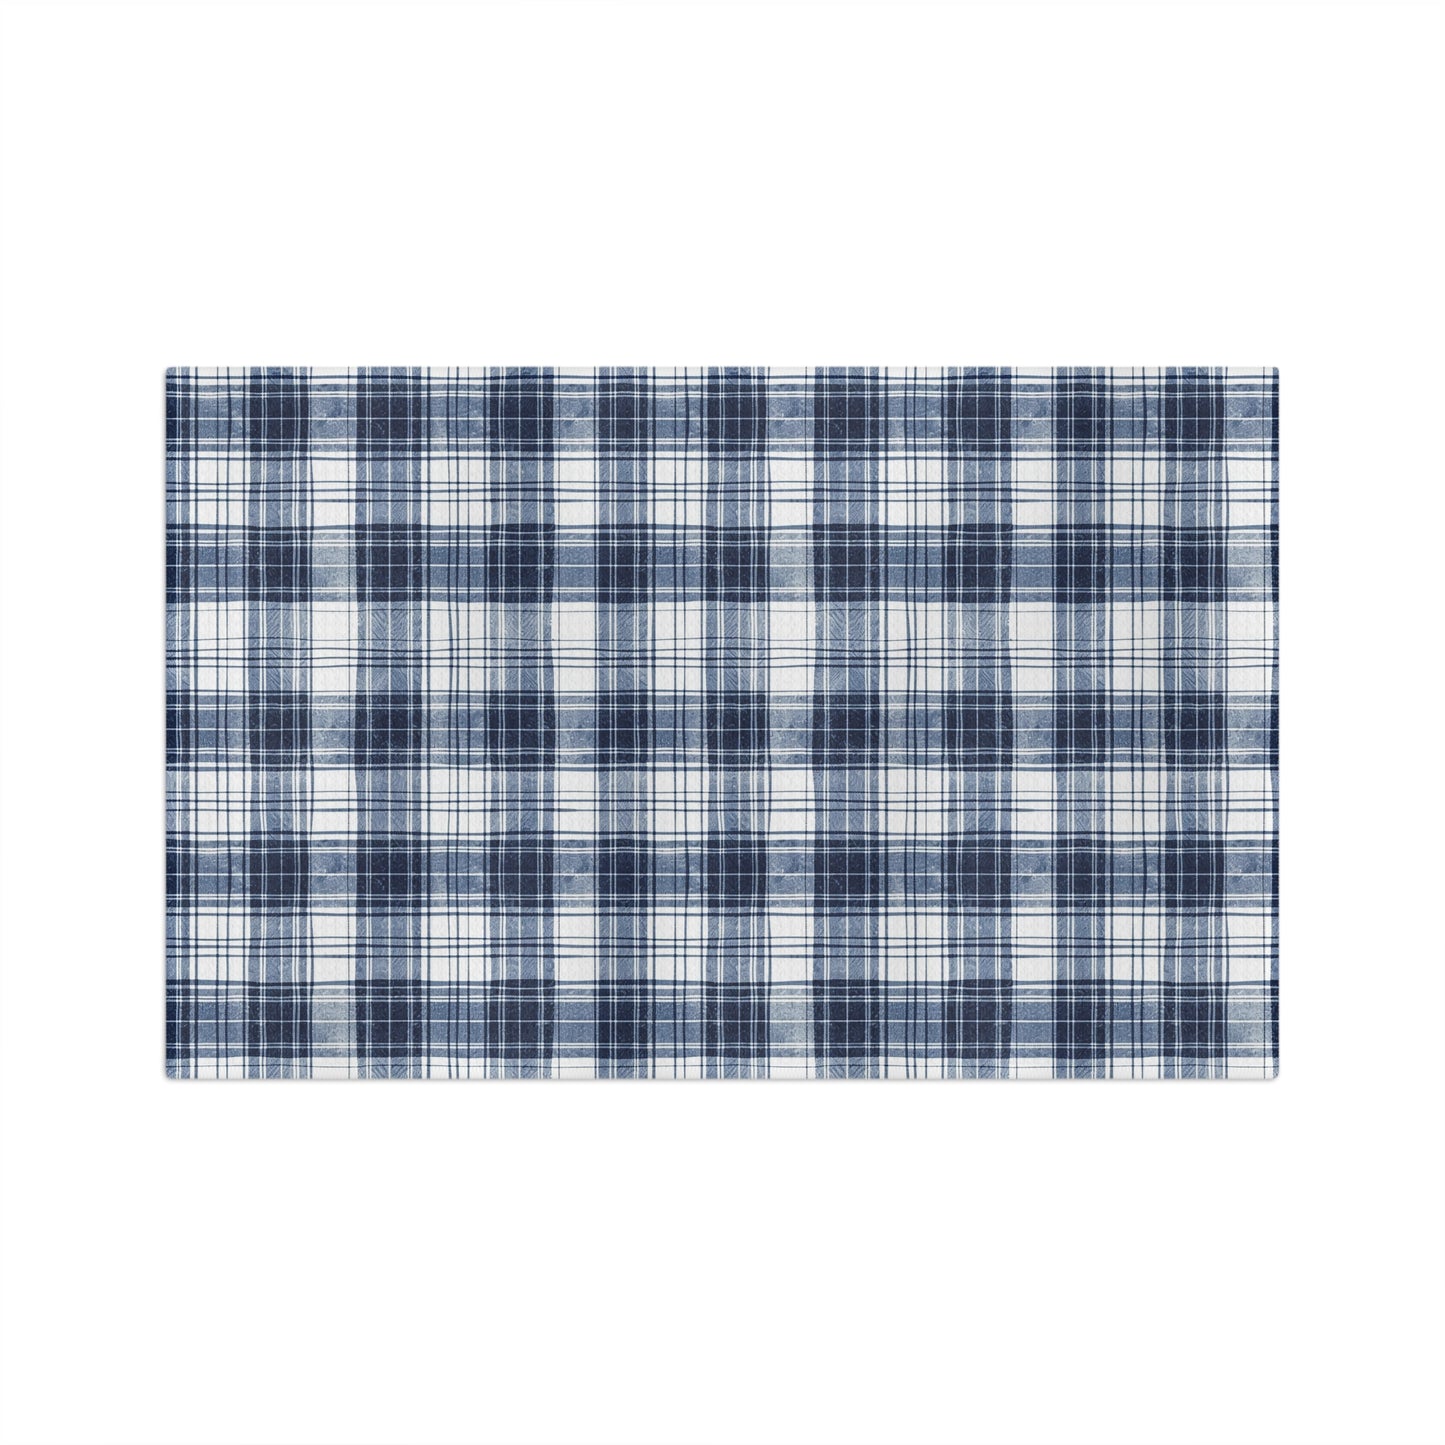 Copy 2 of Microfiber Tea Towel: Denim Plaid